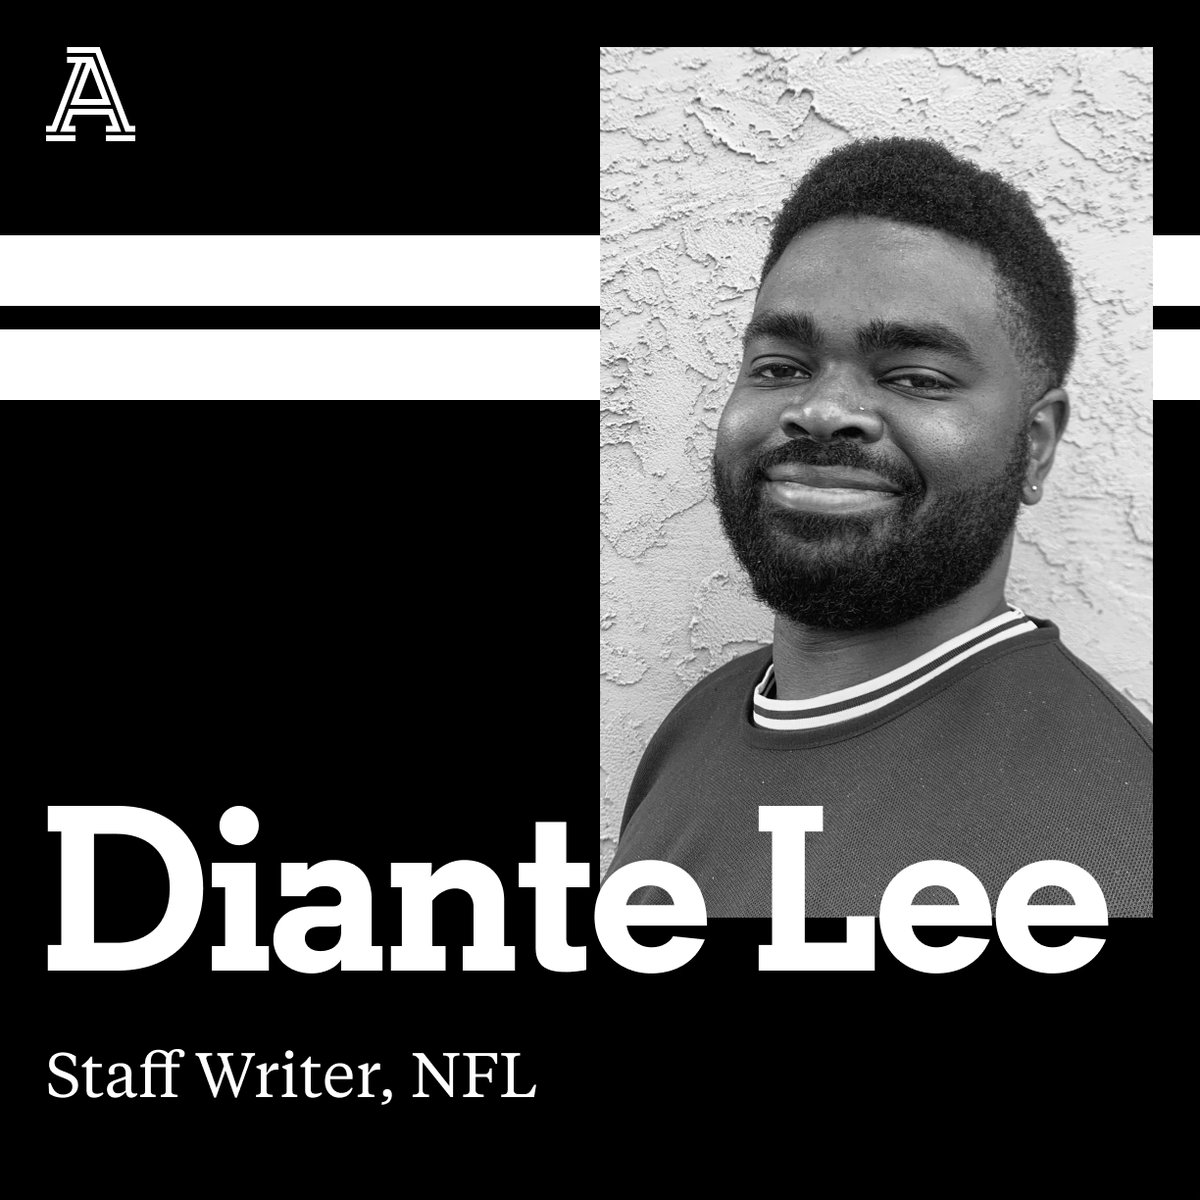 Diante Lee on Twitter: 